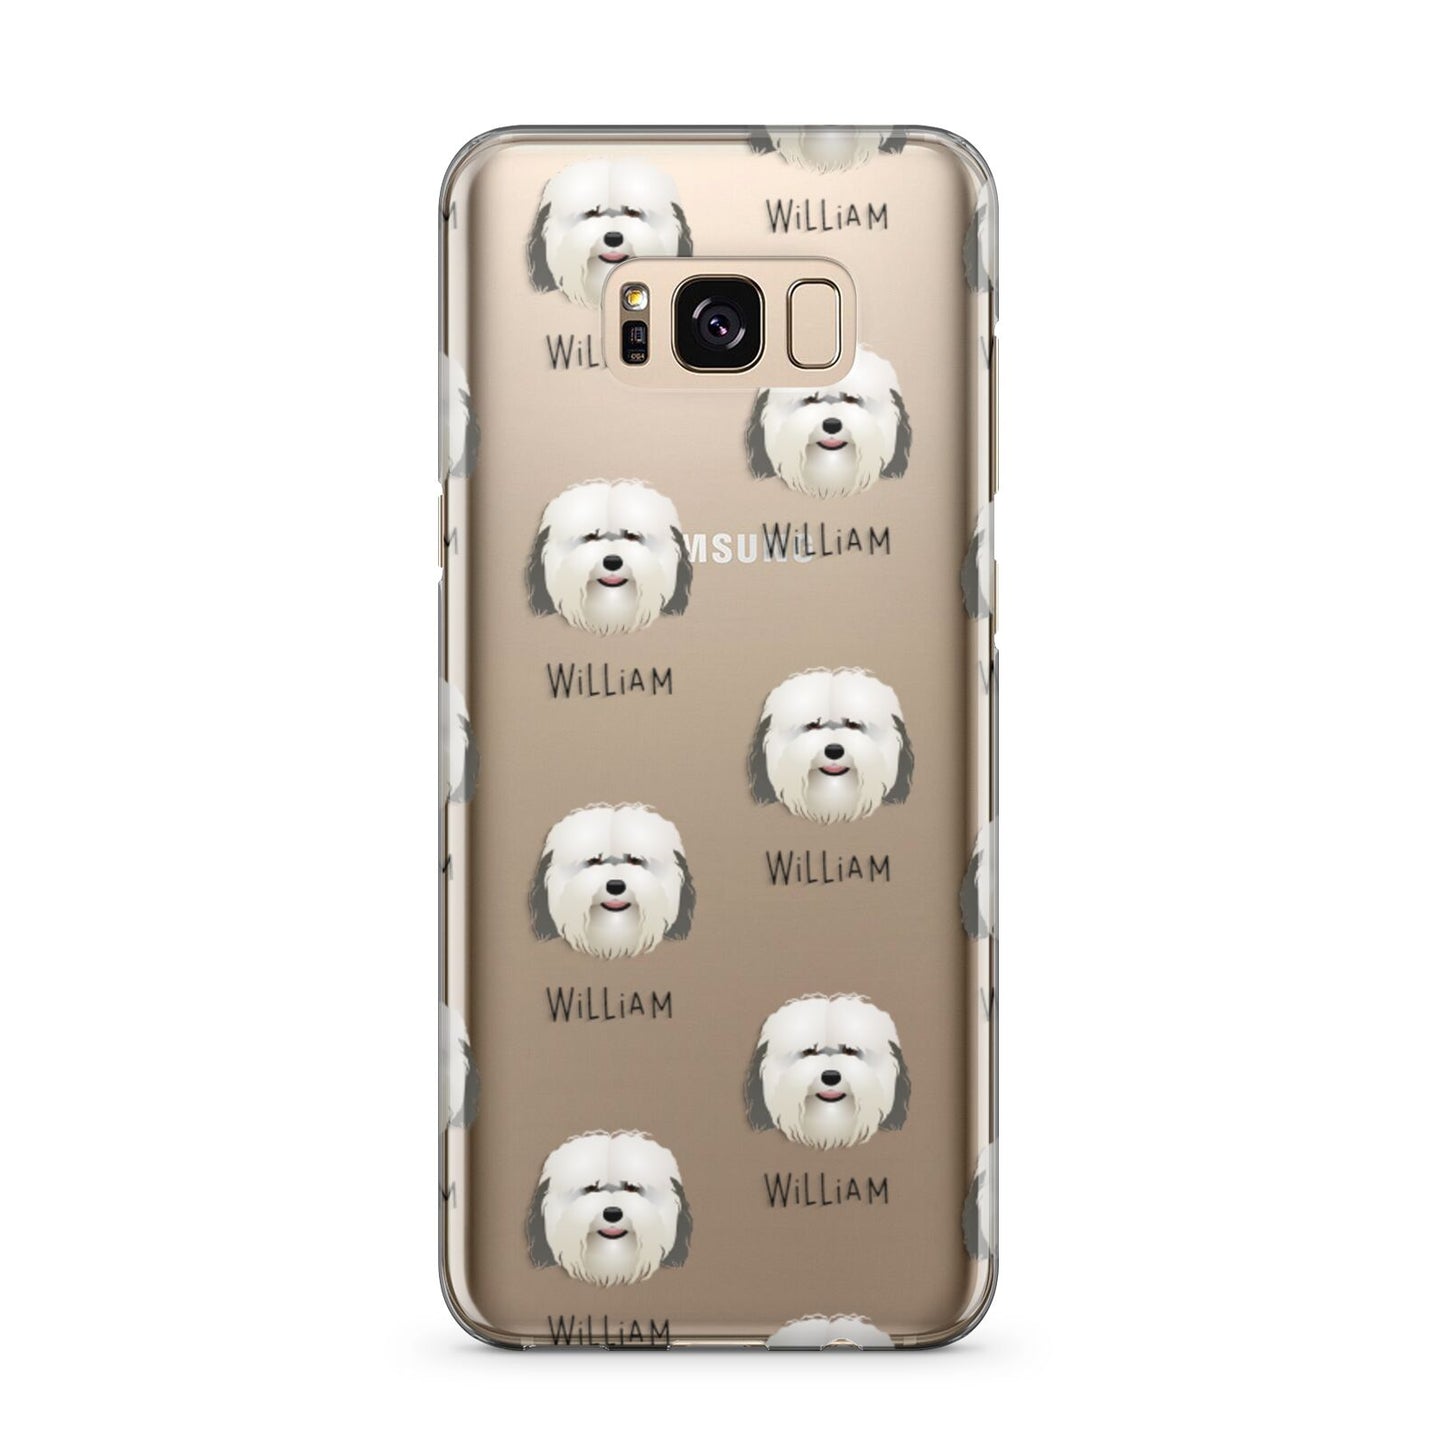 Coton De Tulear Icon with Name Samsung Galaxy S8 Plus Case